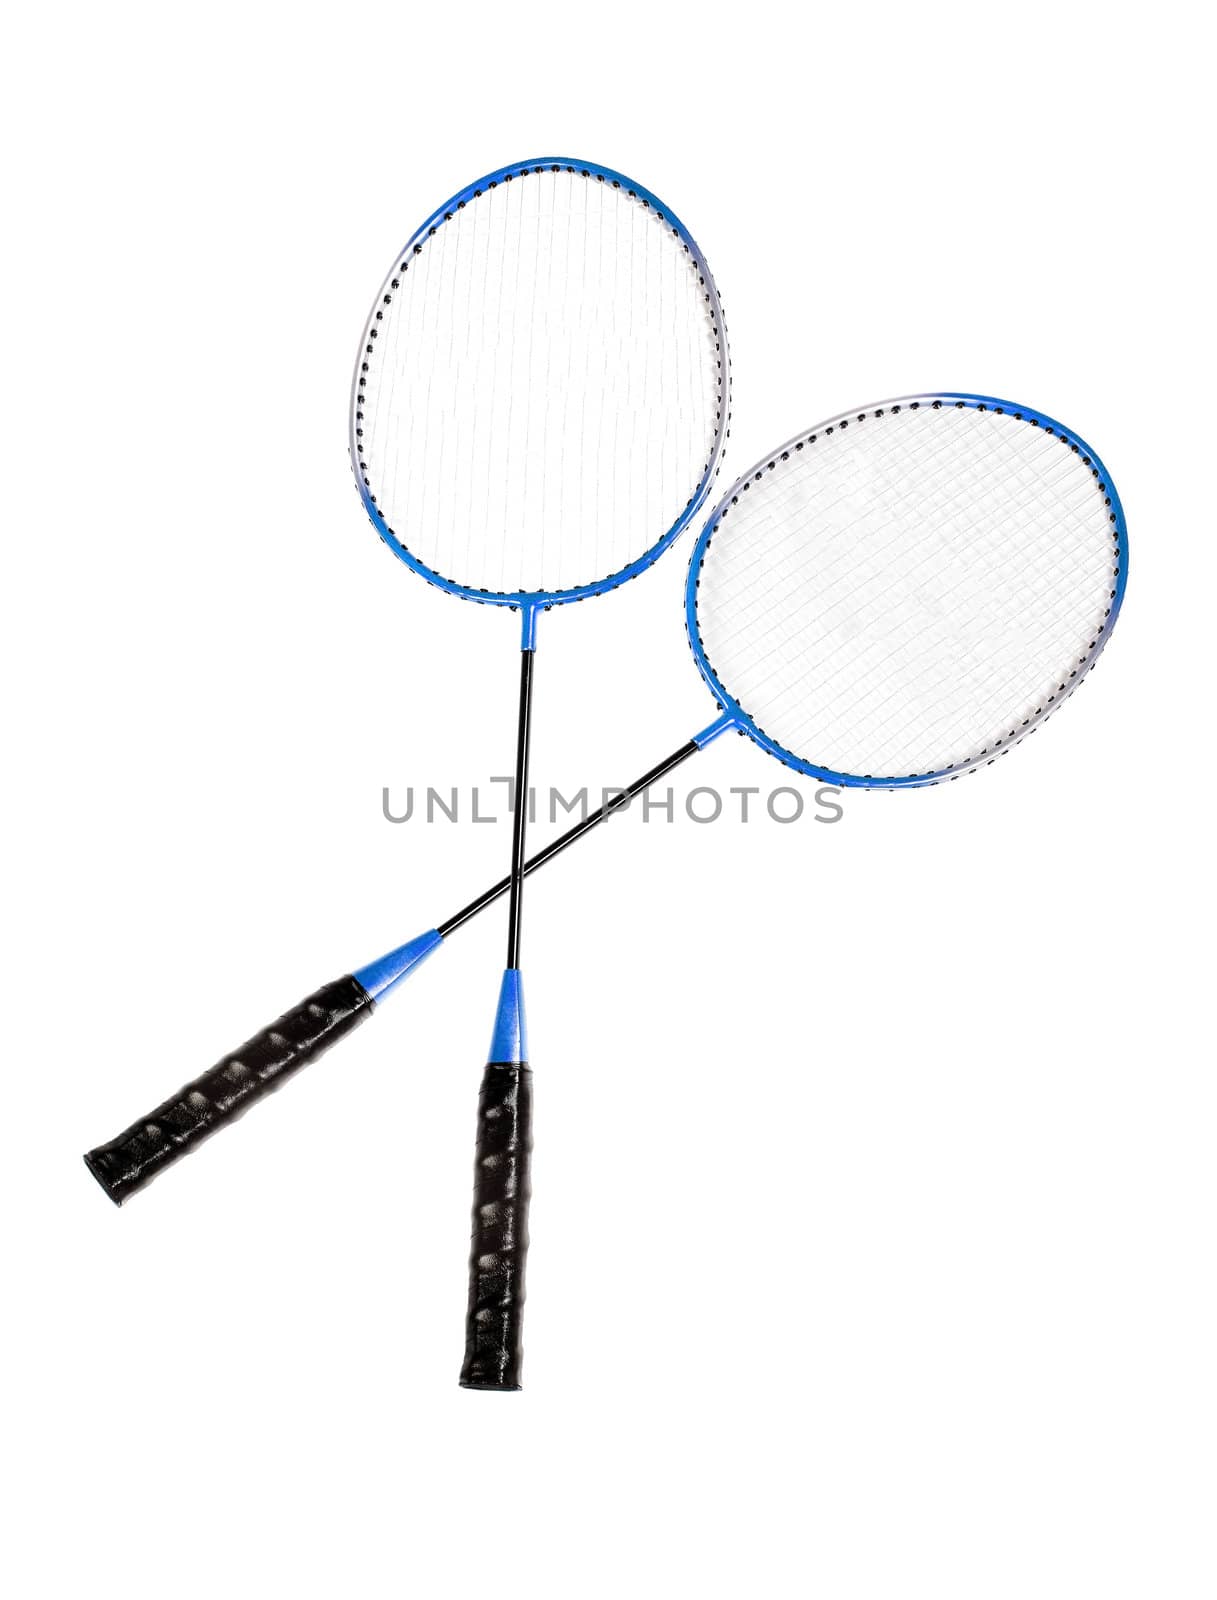 Badminton rackets close up isolated on white background